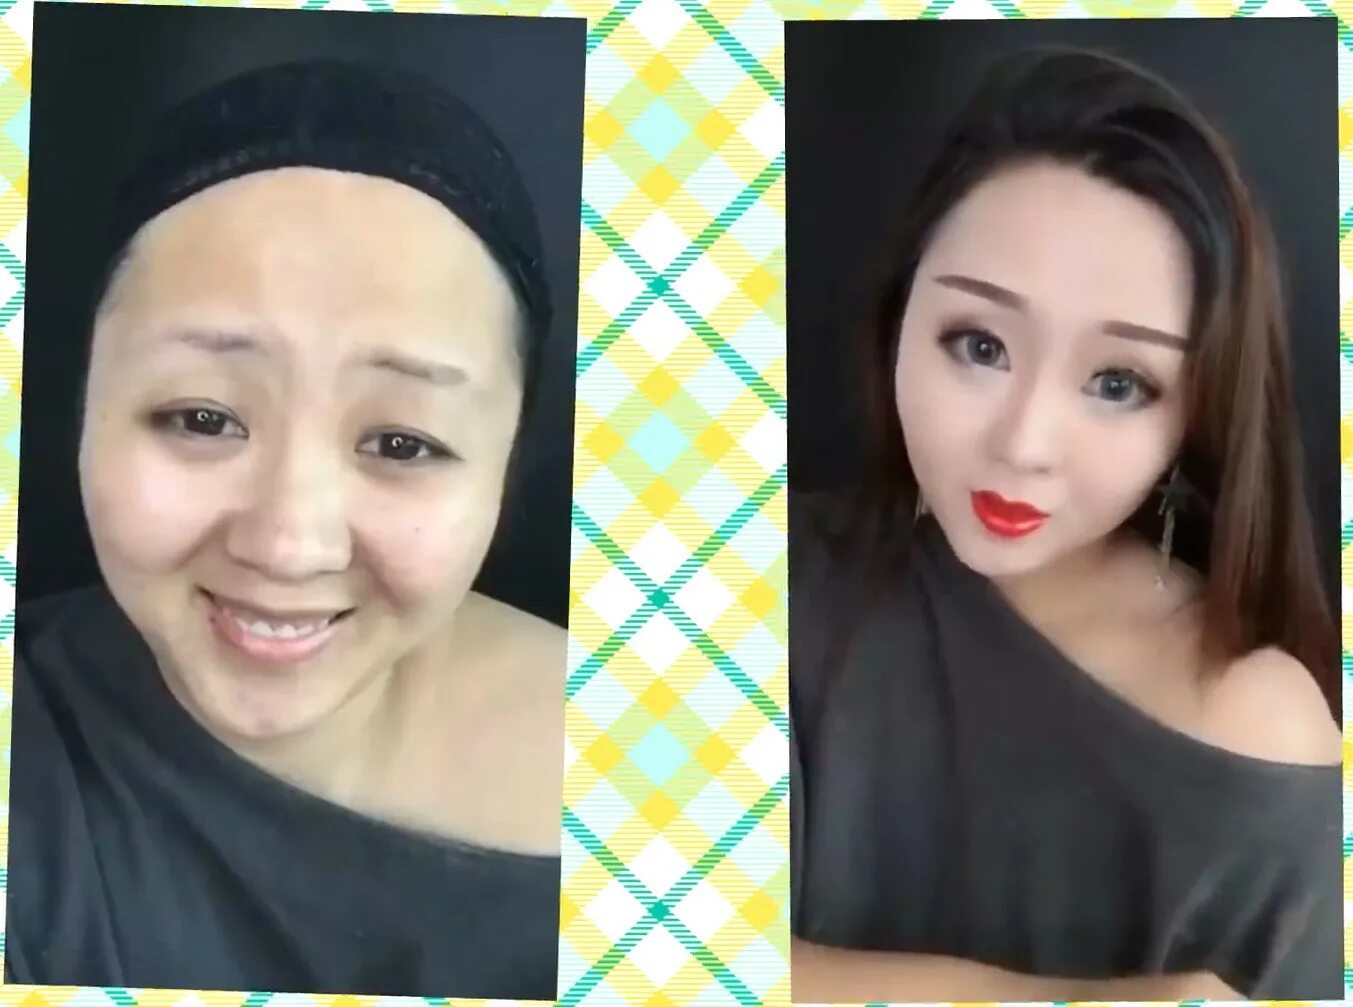 Азиатские девушки без макияжа. Китаянки до и после макияжа. Азиатский макияж до и после. Азиатки до и после макияжа. Агра киид без макияжа